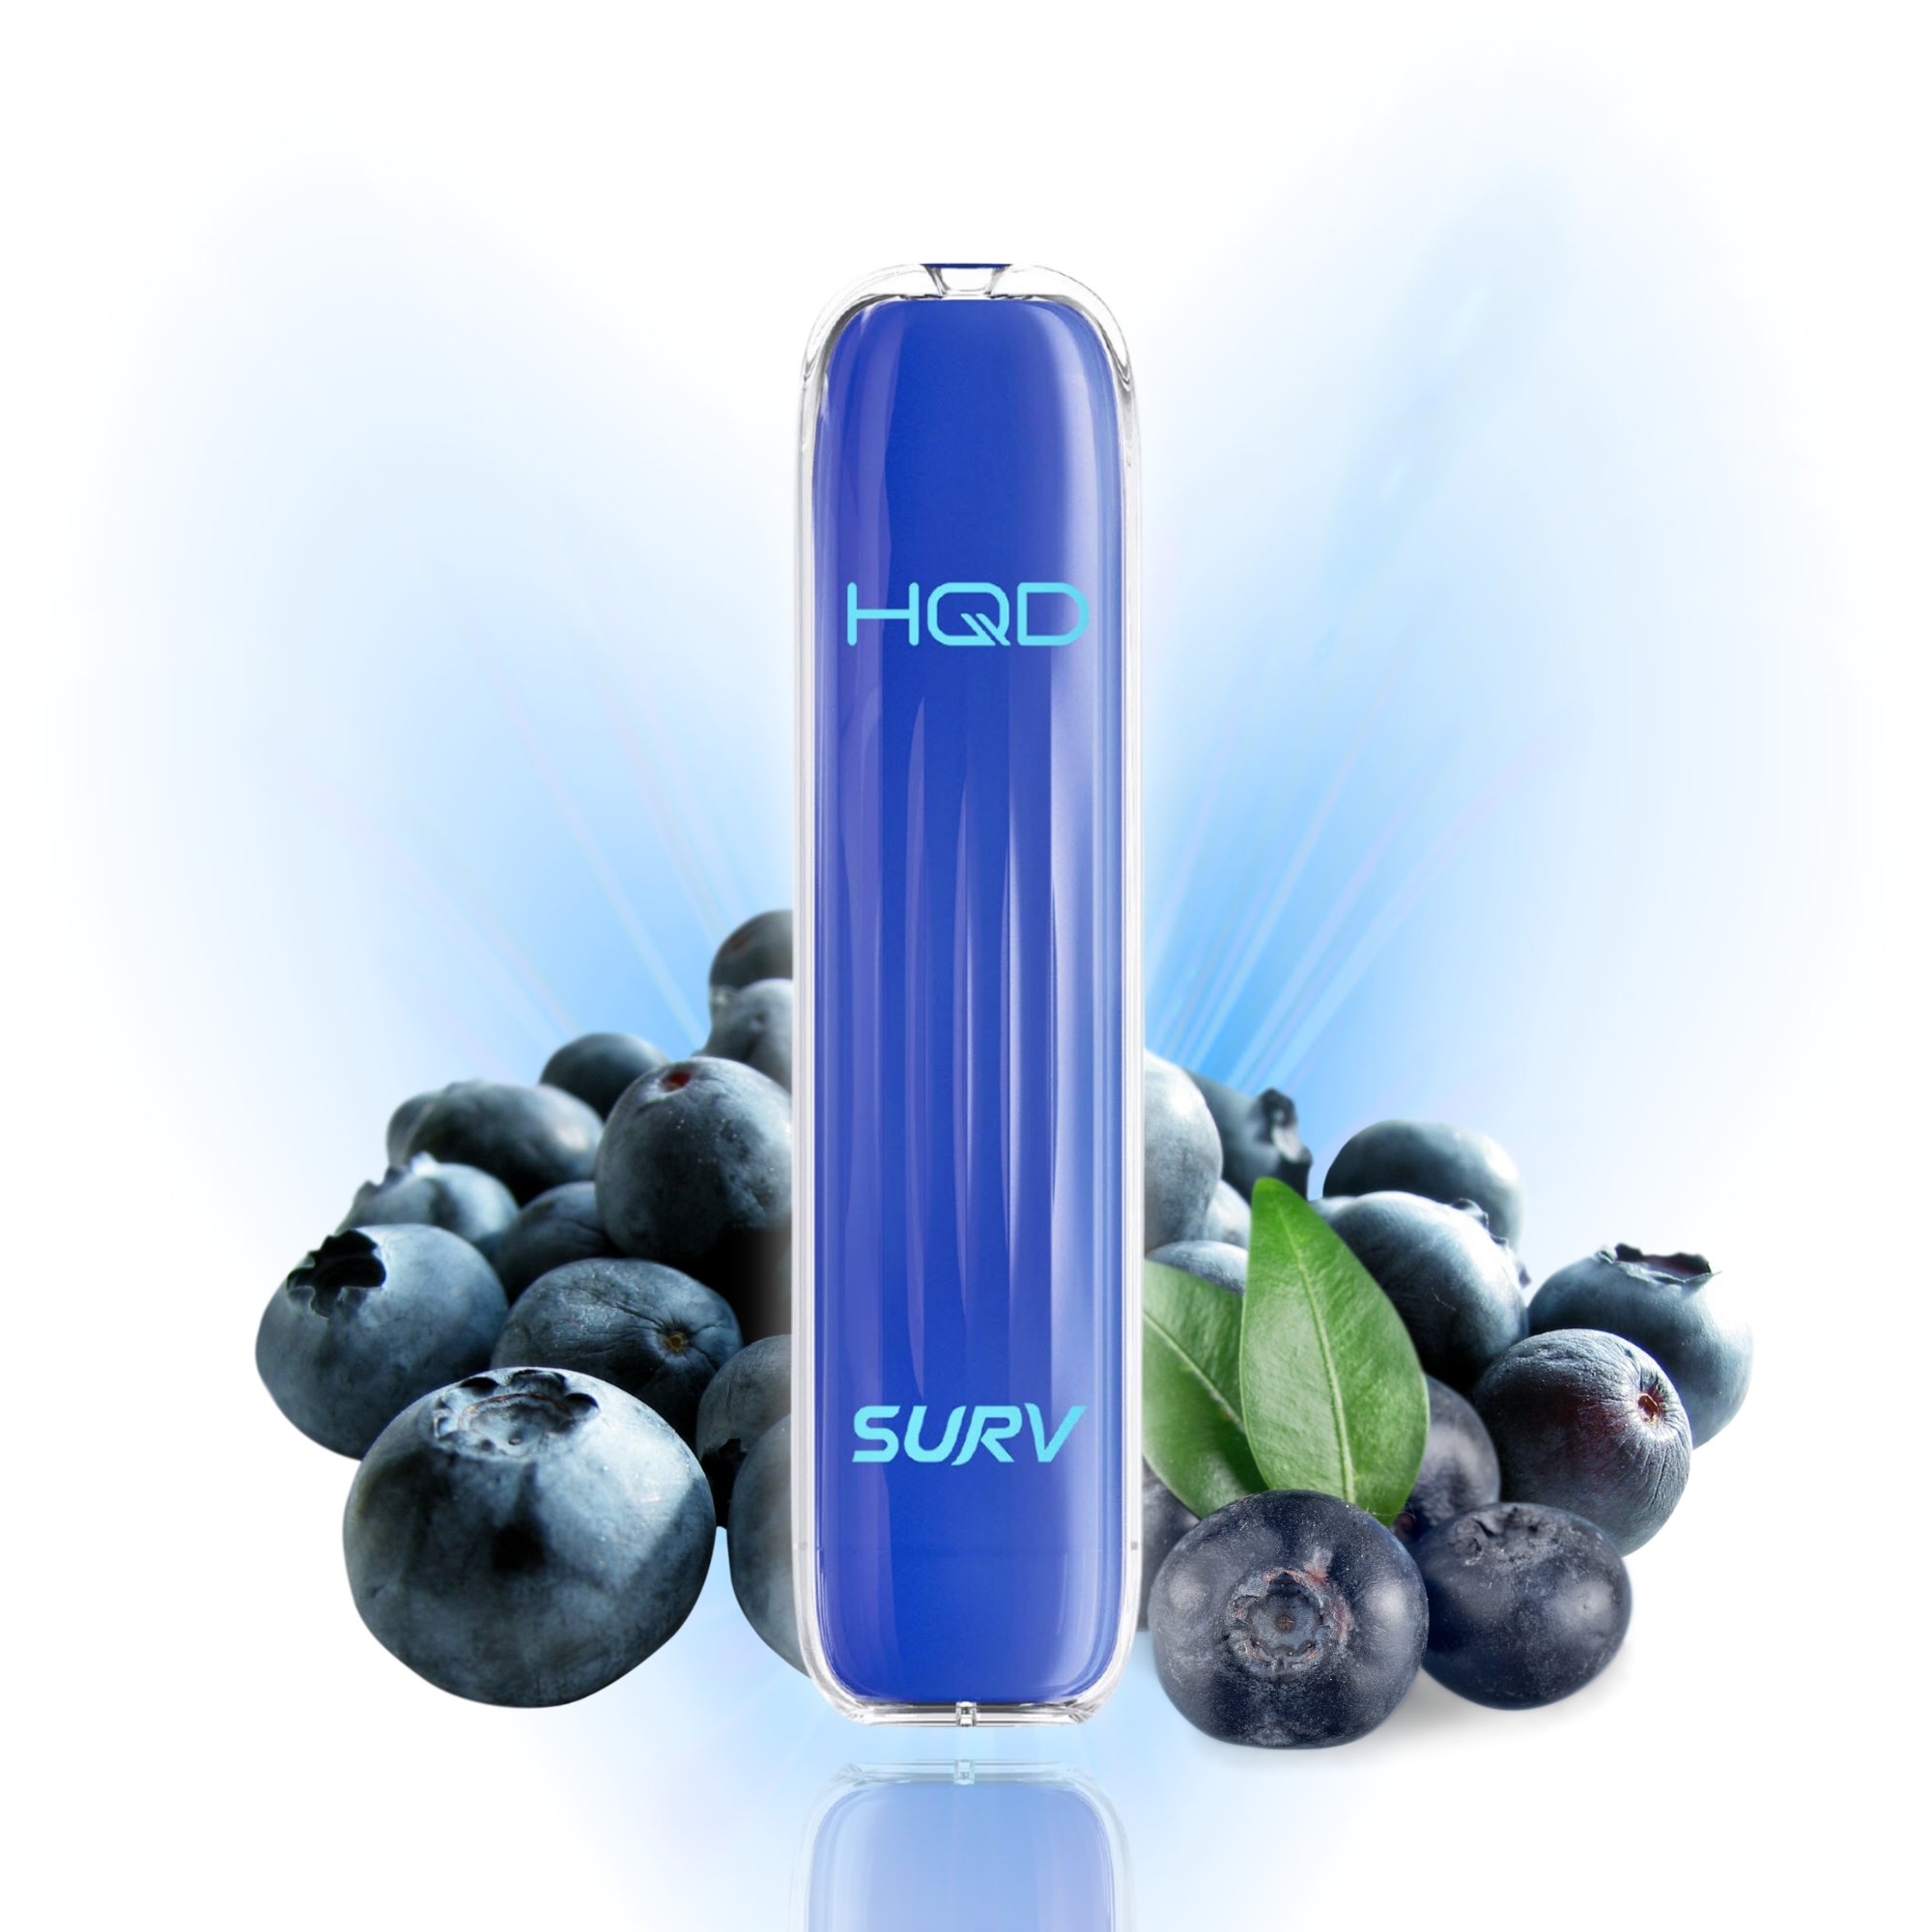 HQD Surv Blueberry 18mg/ml